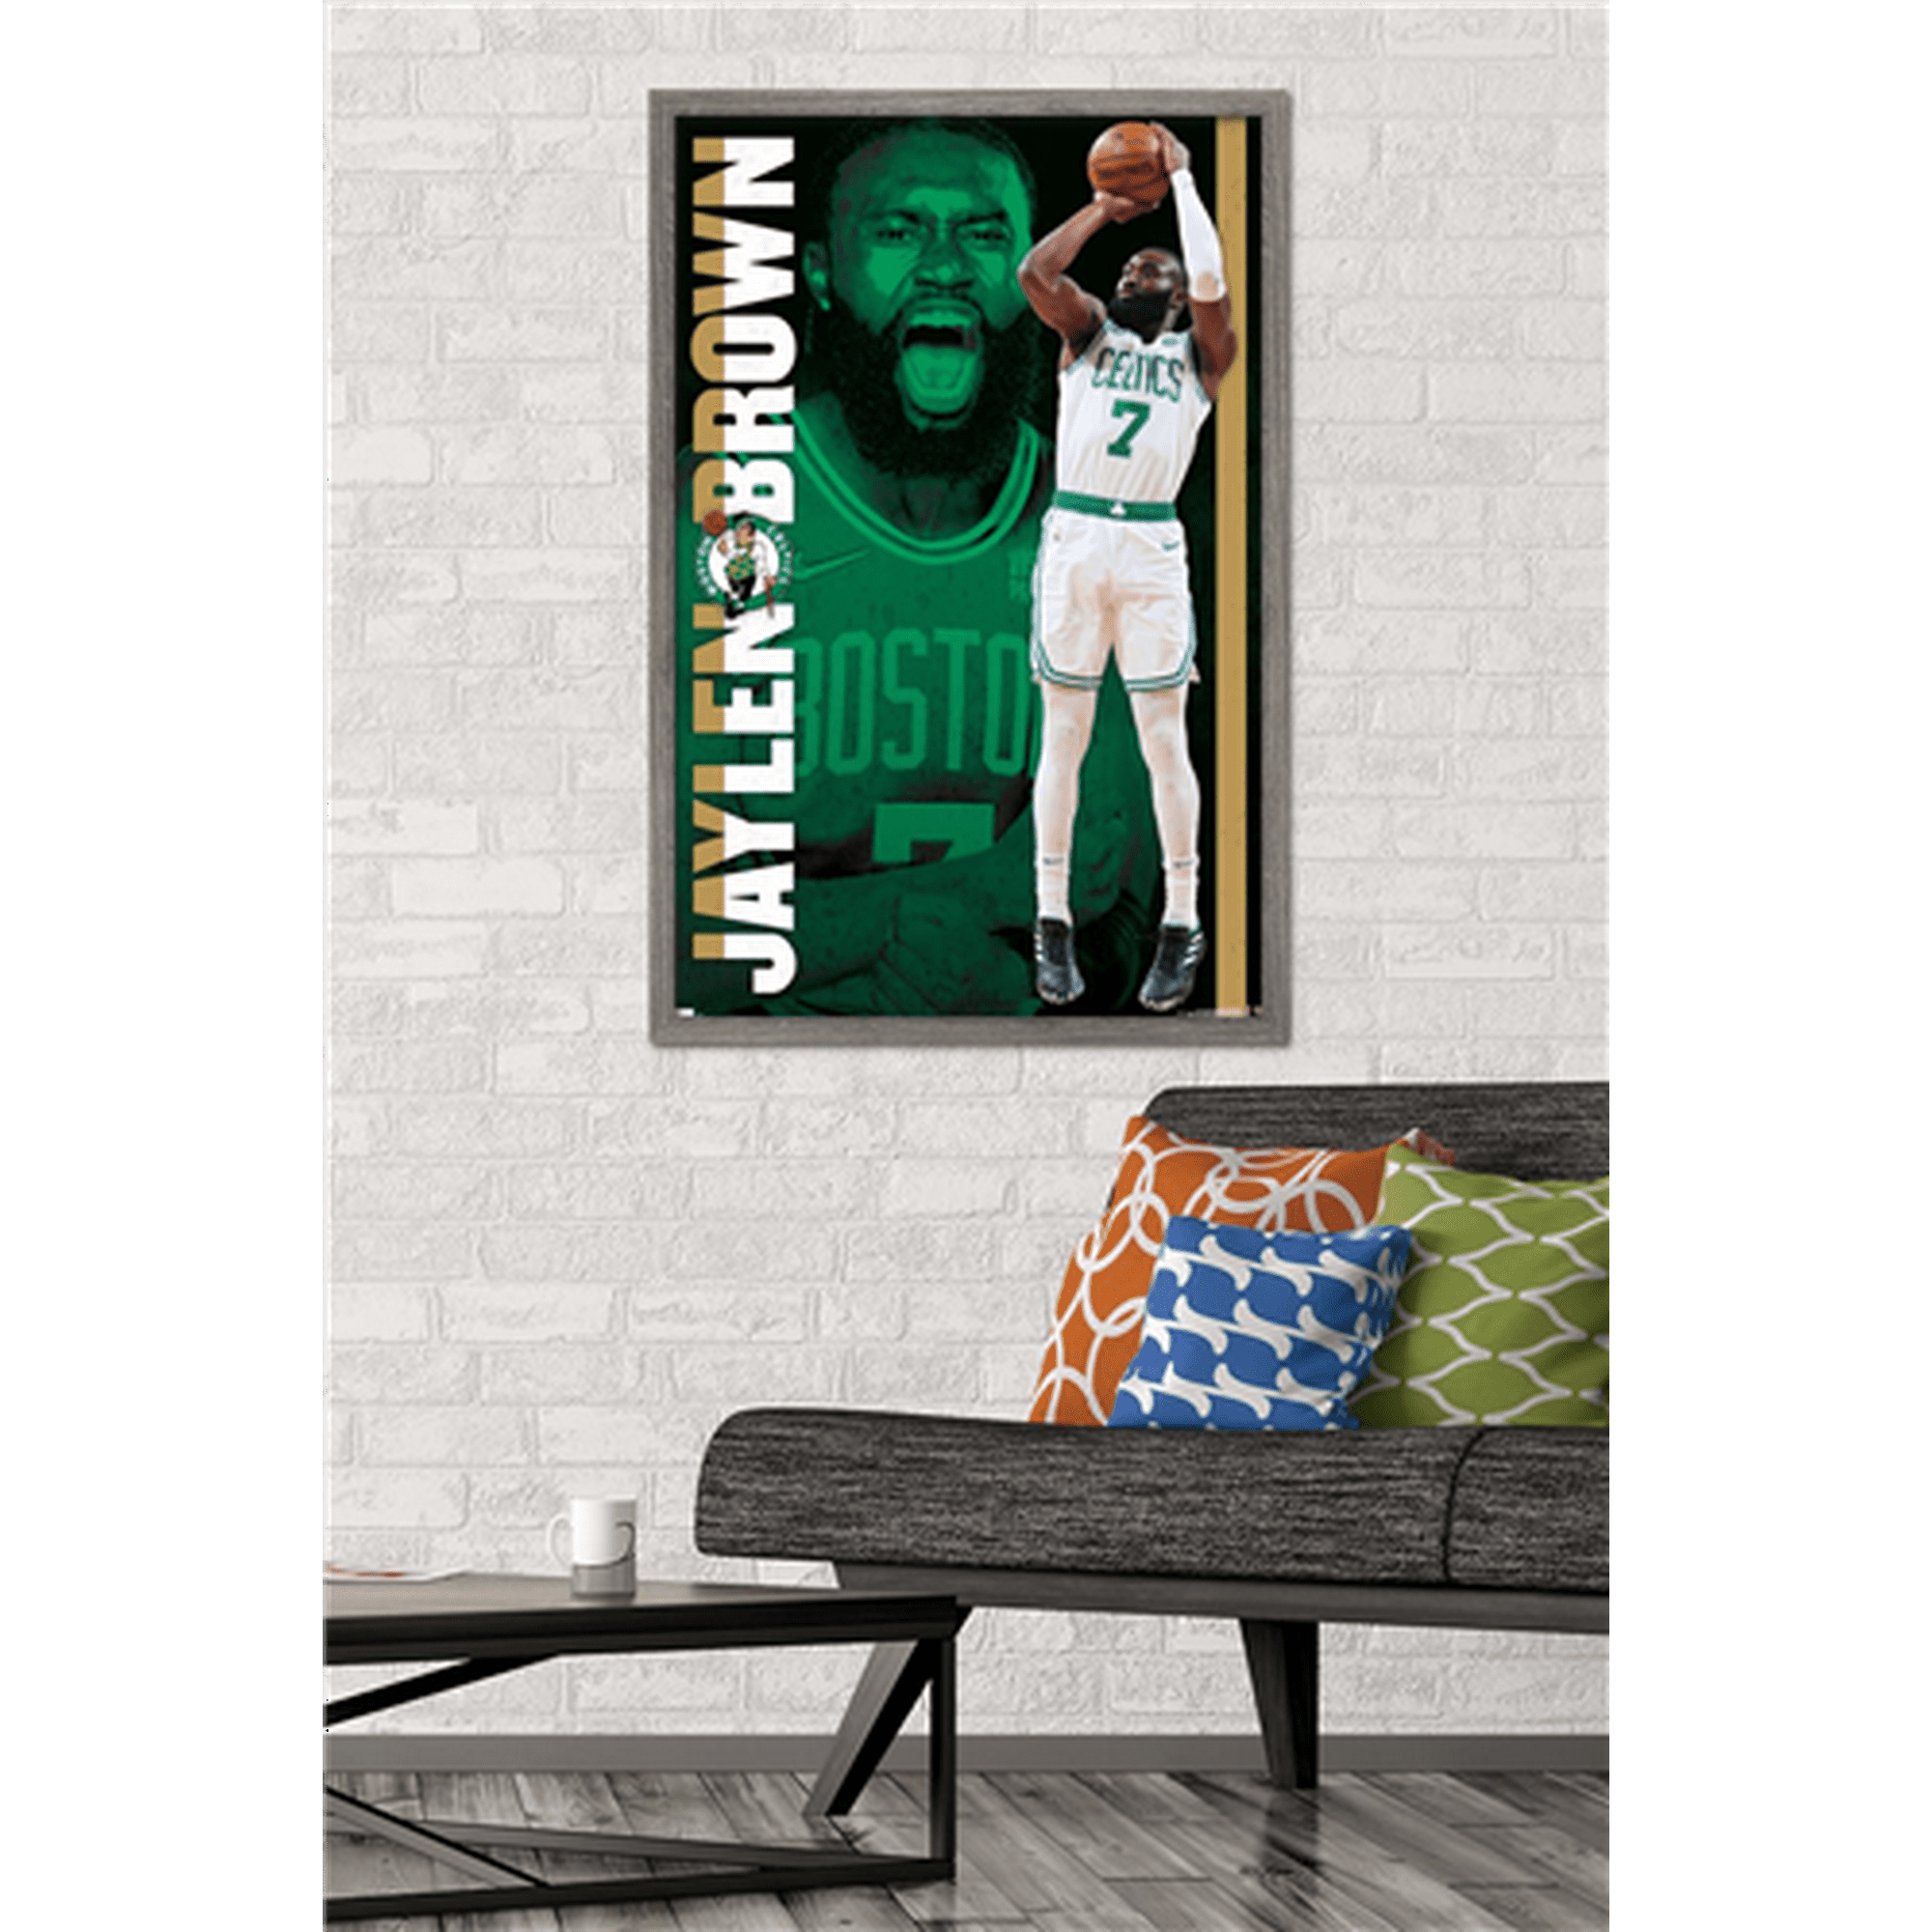  Trends International NBA Boston Celtics - Jaylen Brown 21 Wall  Poster, 22.375 x 34, Unframed Version : Sports & Outdoors